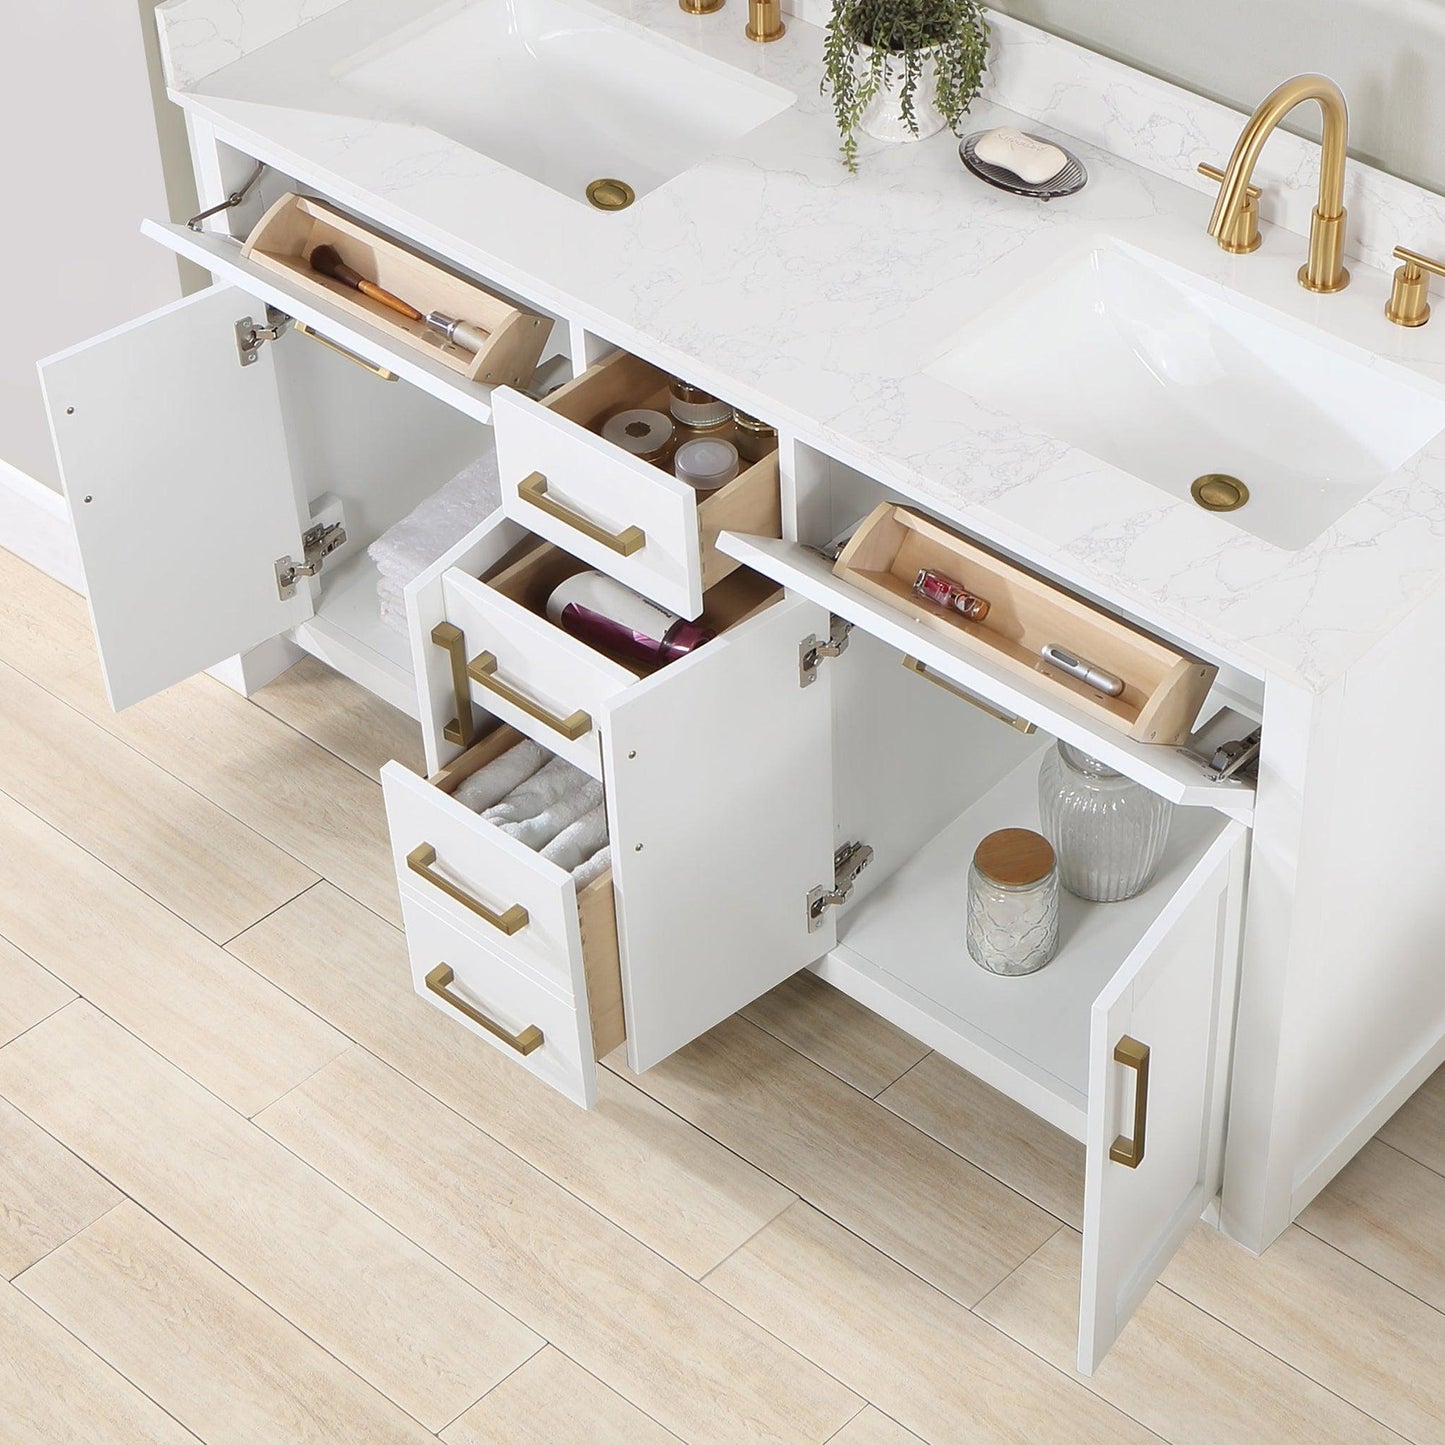 Altair Gavino 60" White Freestanding Double Bathroom Vanity Set With Grain White Composite Stone Top, Single Rectangular Undermount Ceramic Sink, Overflow, Sidesplash, and Backsplash